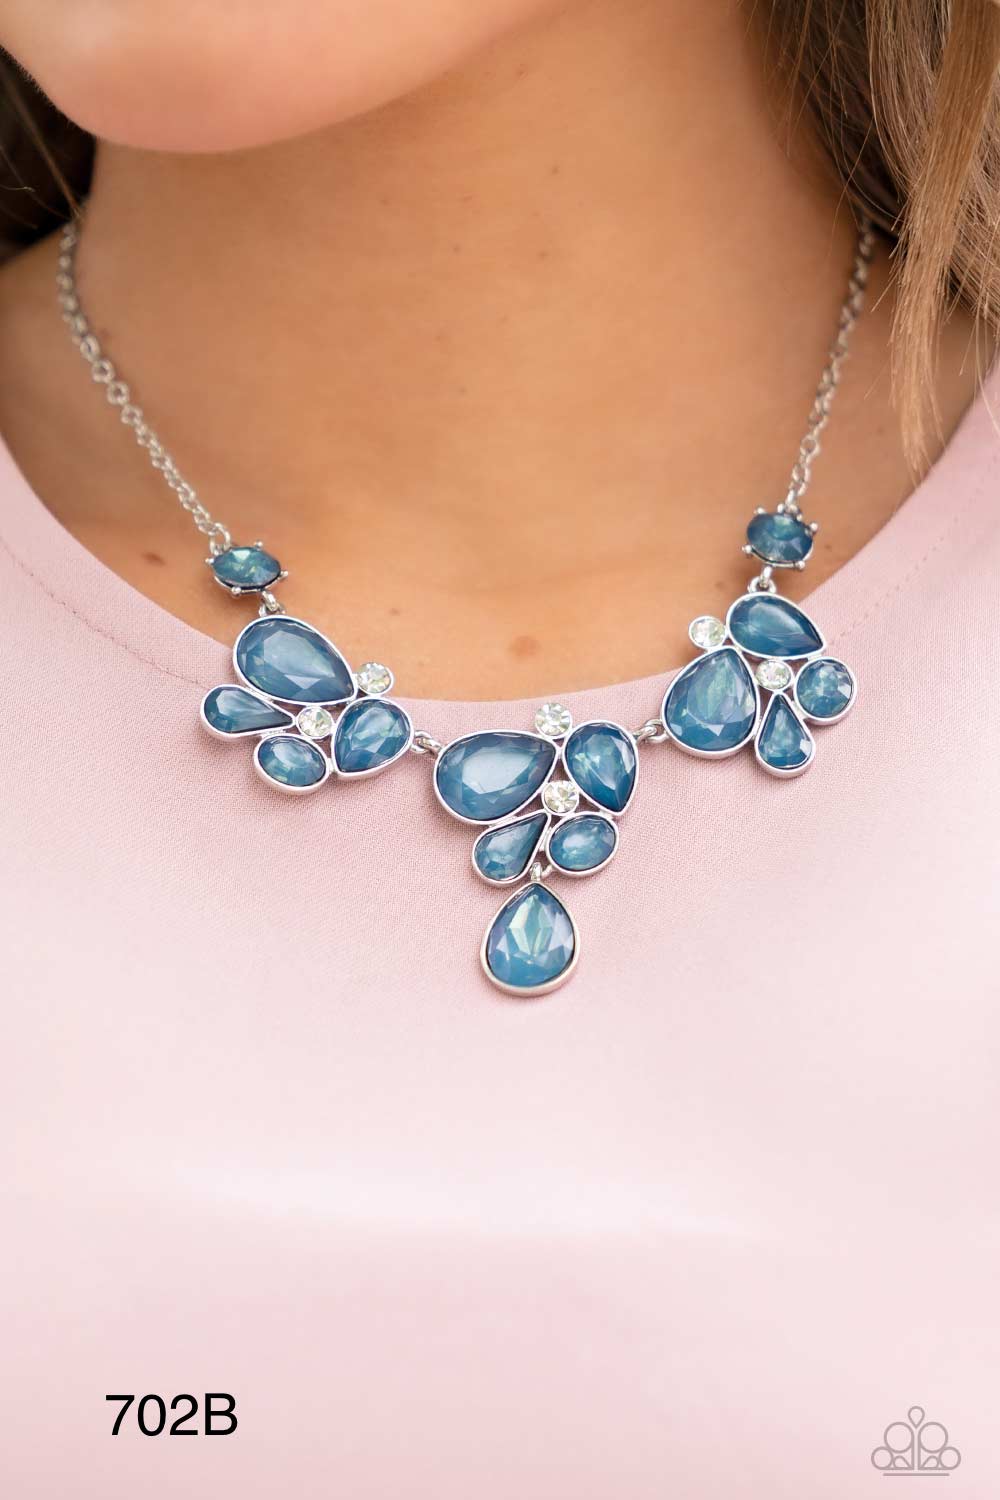 Paparazzi “Everglade Escape” Blue Necklace Earring Set